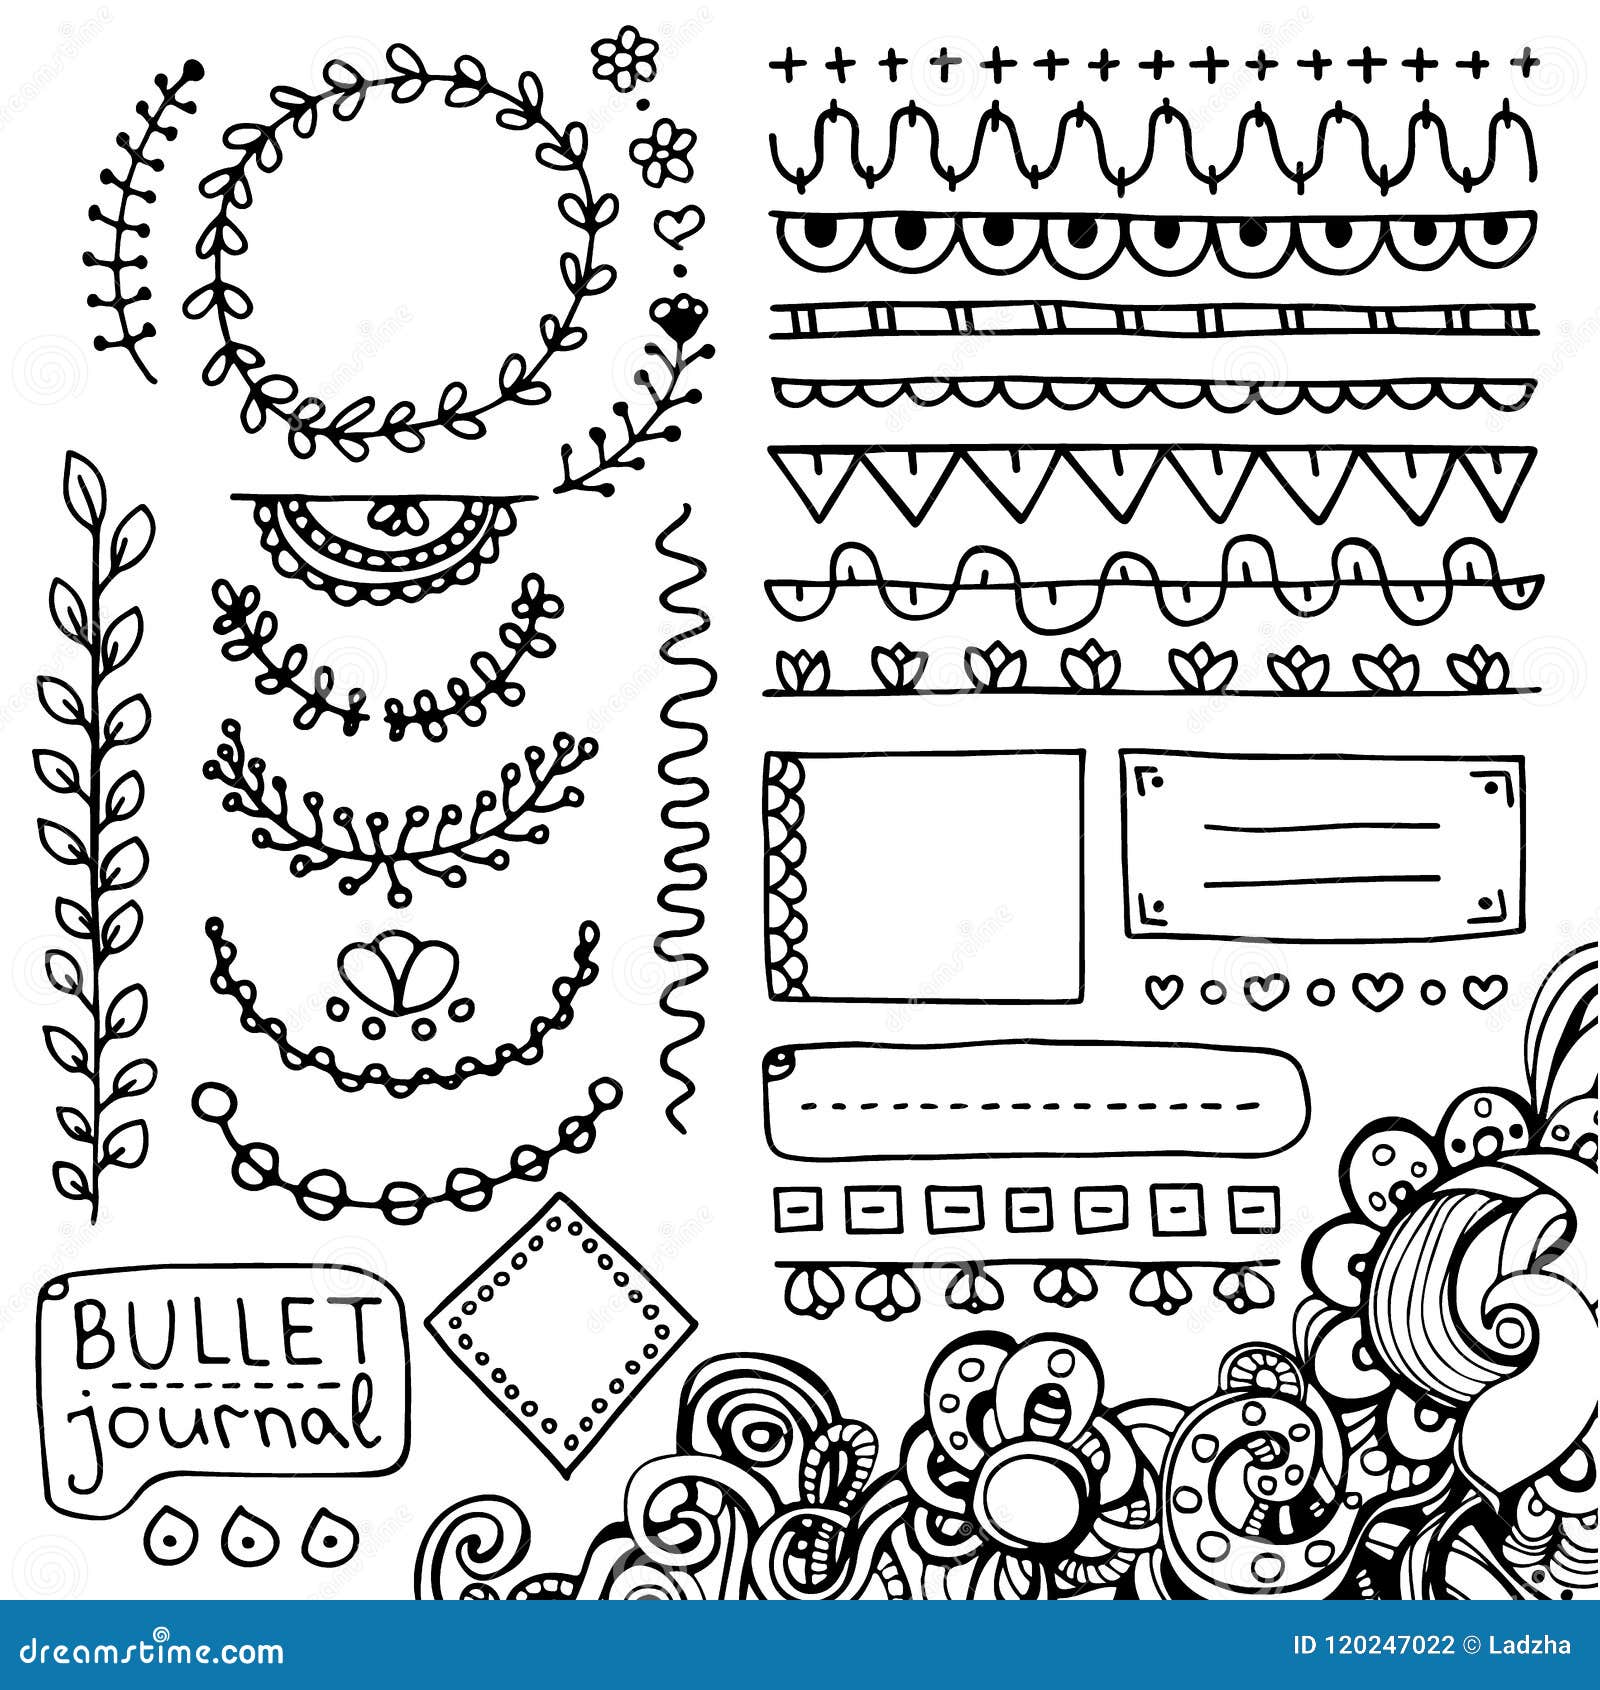 Bullet journal sketch elements notebook girly Vector Image